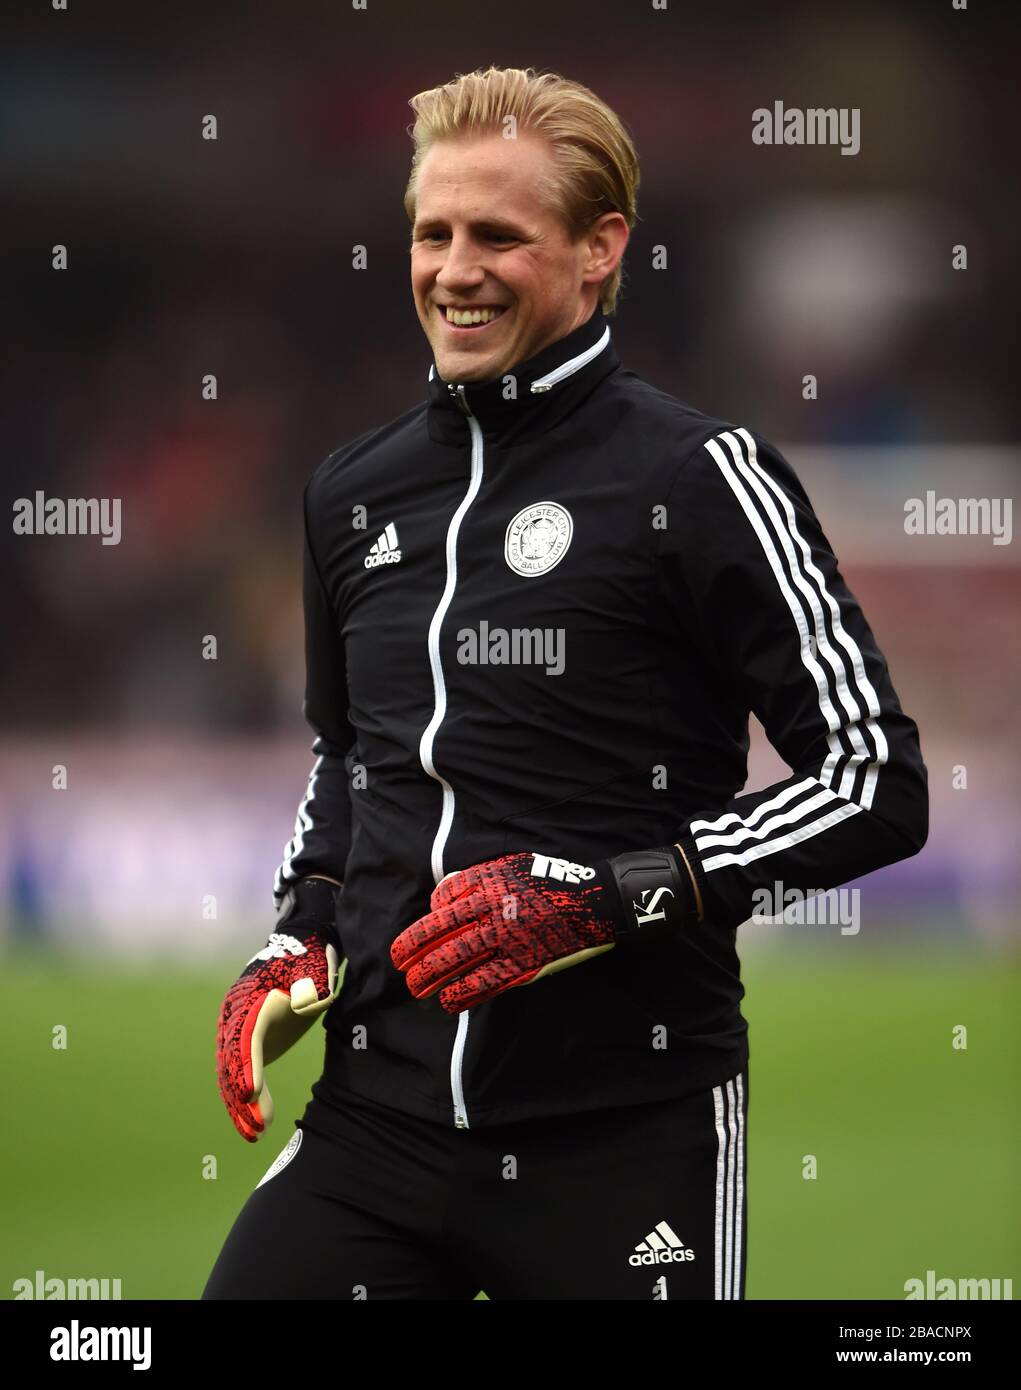 Leicester City goalkeeper Kasper Schmeichel Stock Photo - Alamy